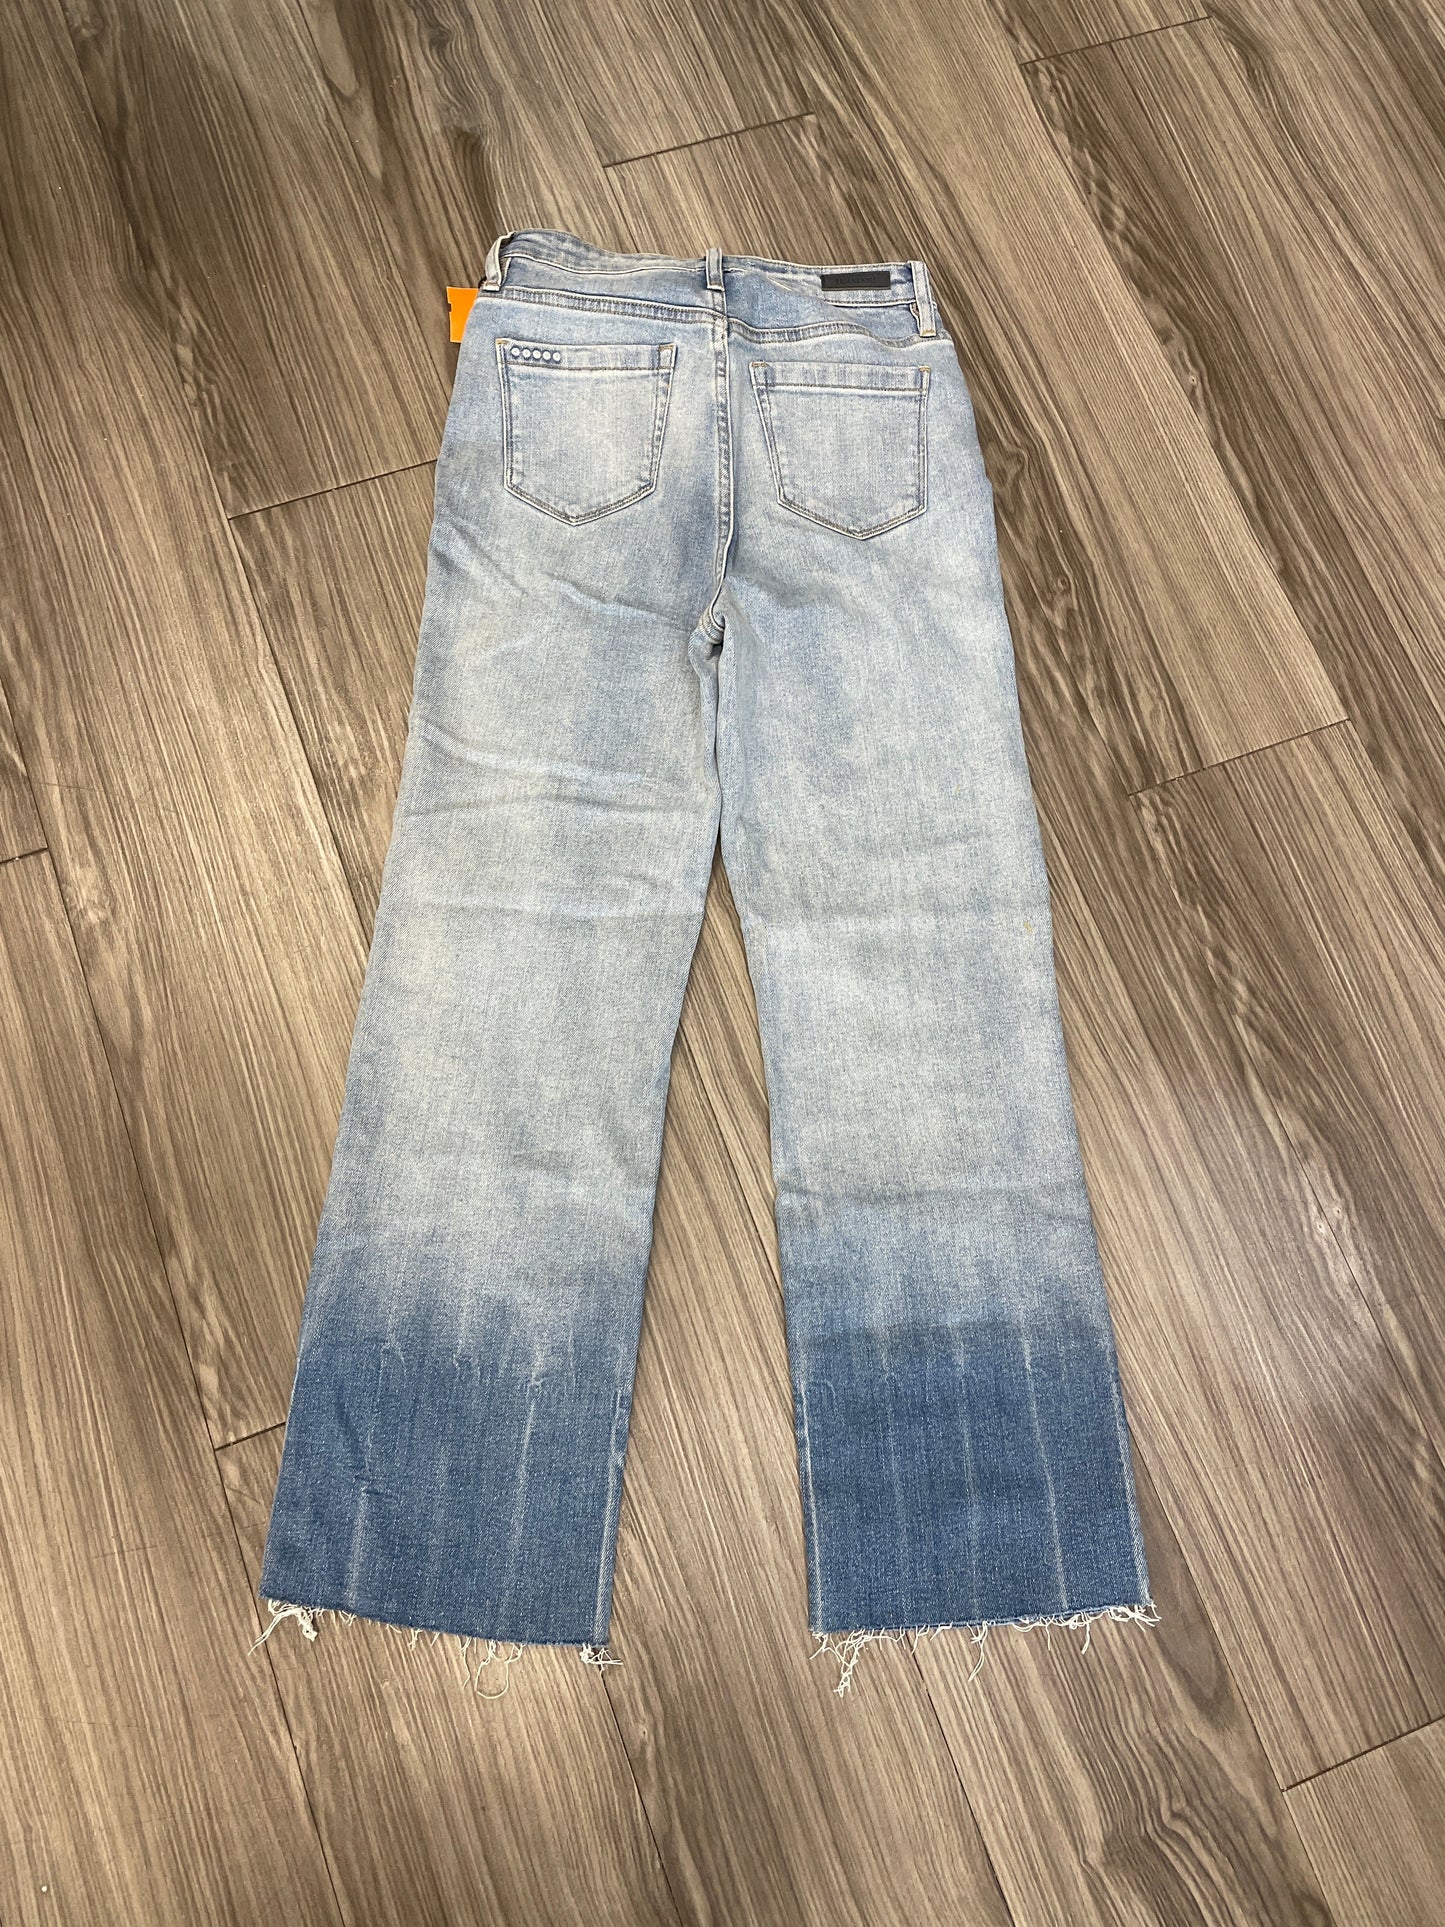 Jeans Boot Cut By Blanknyc  Size: 4